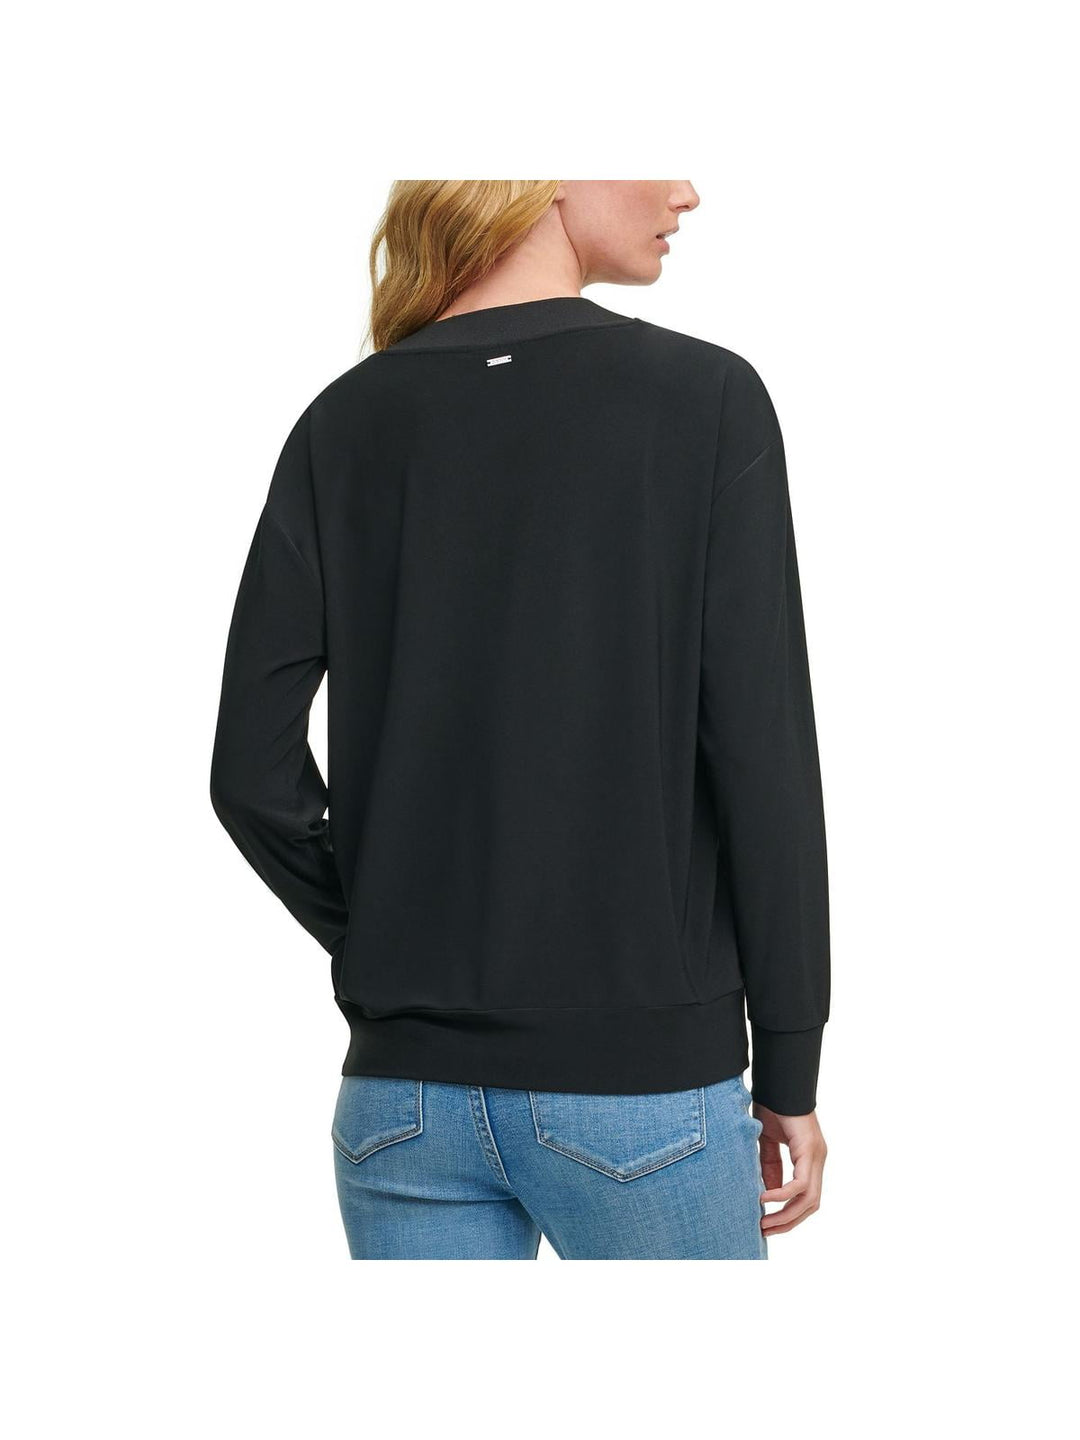 DKNY Women's Faux Leather Front Sweatshirt Black Size Medium